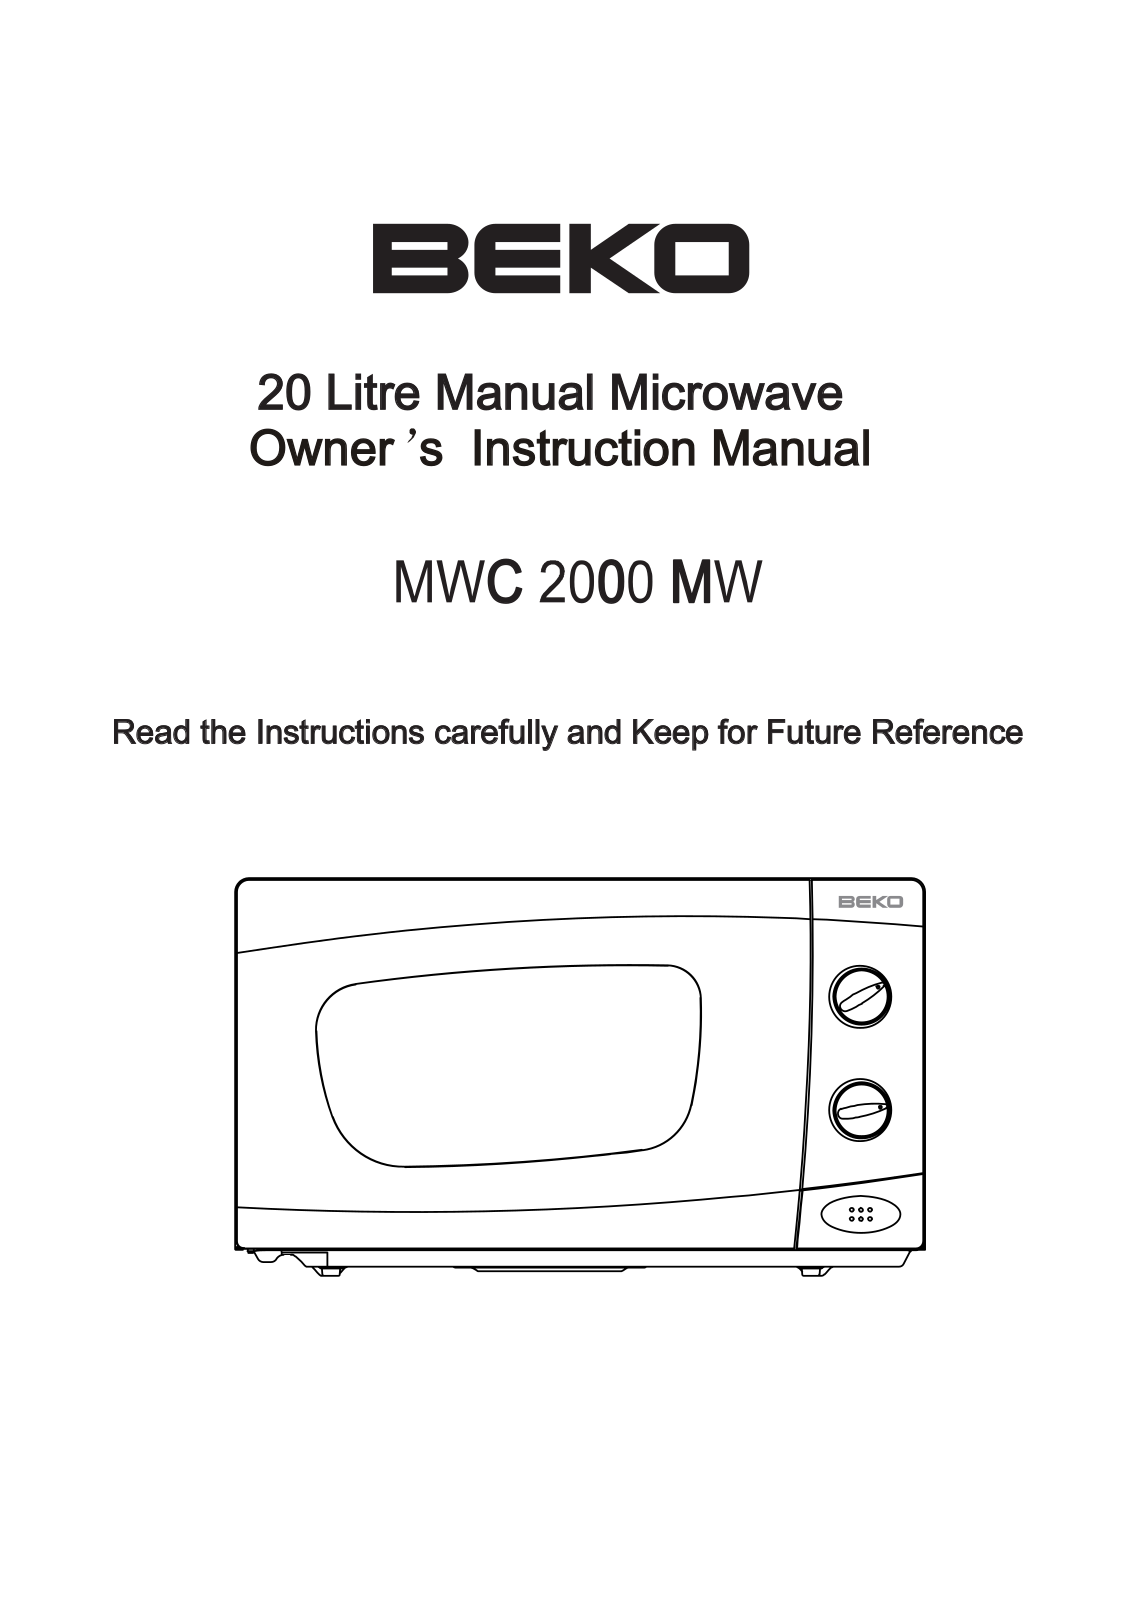 Beko MWC 2000 MW Manual